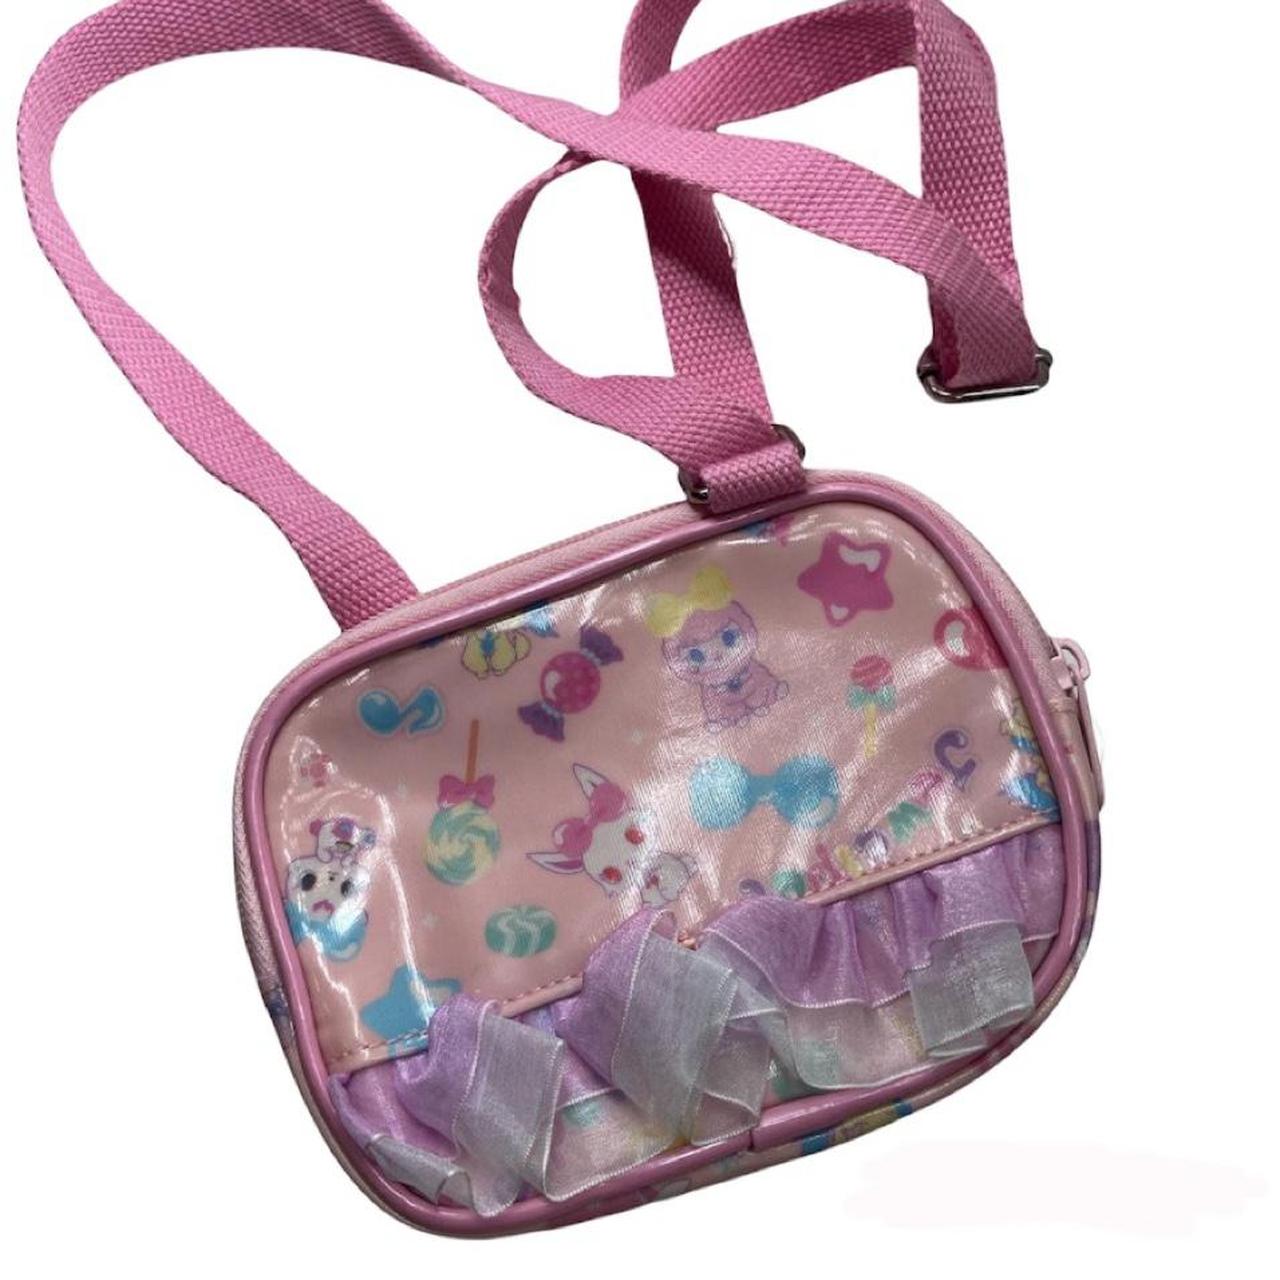 Rare!! Sanrio Jewelpet mini pink purse! So tiny and... - Depop